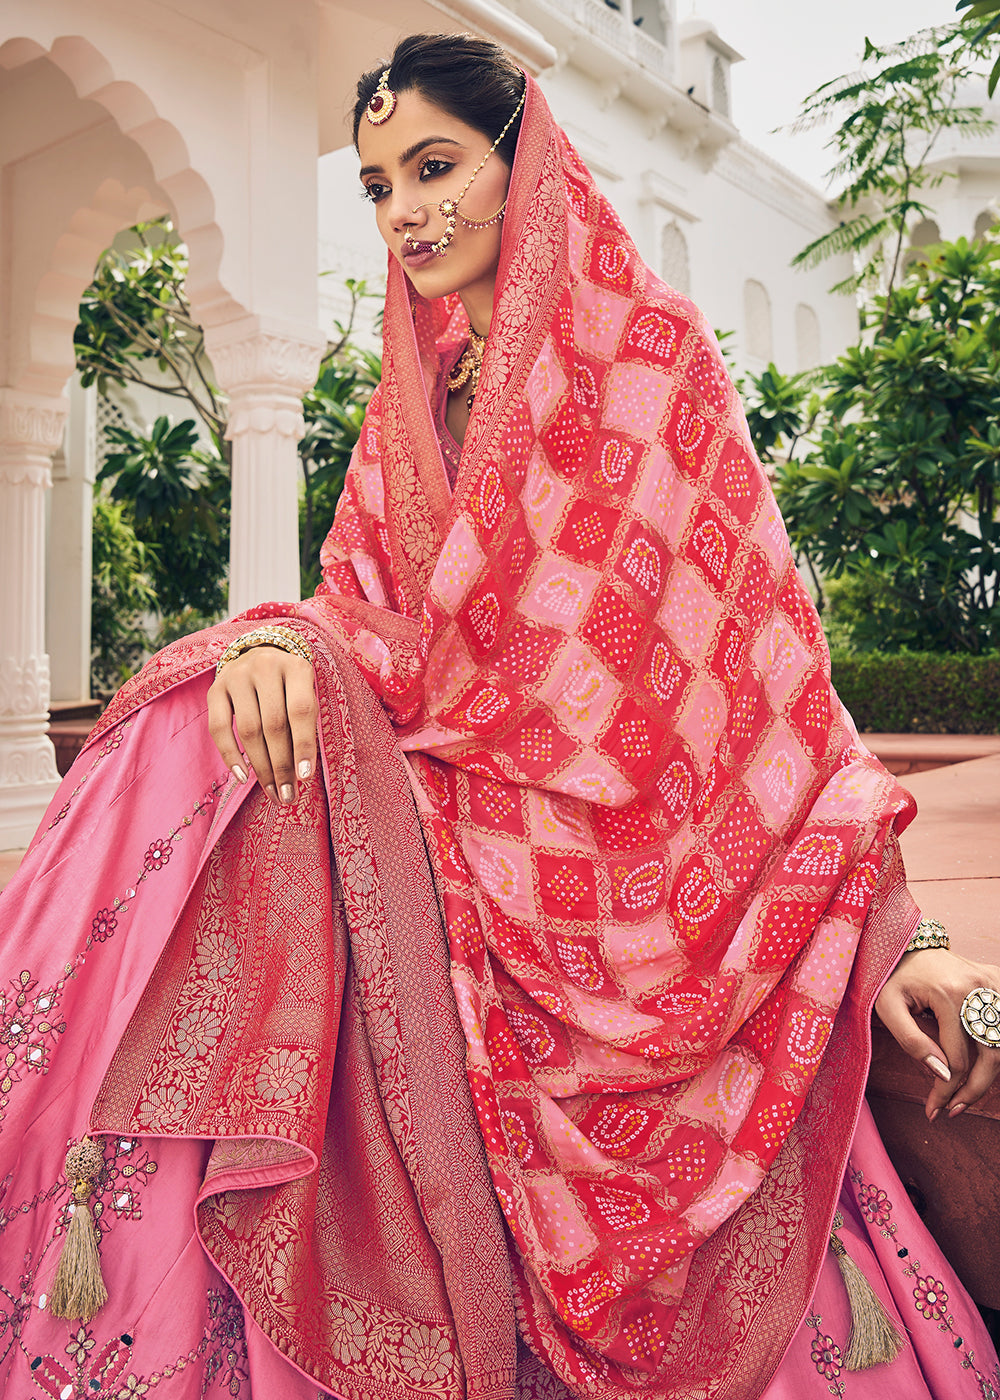 Buy Now Gorgeous Pink Viscose Silk Traditional Bridal Lehenga Choli Online in USA, UK, Canada & Worldwide at Empress Clothing. 